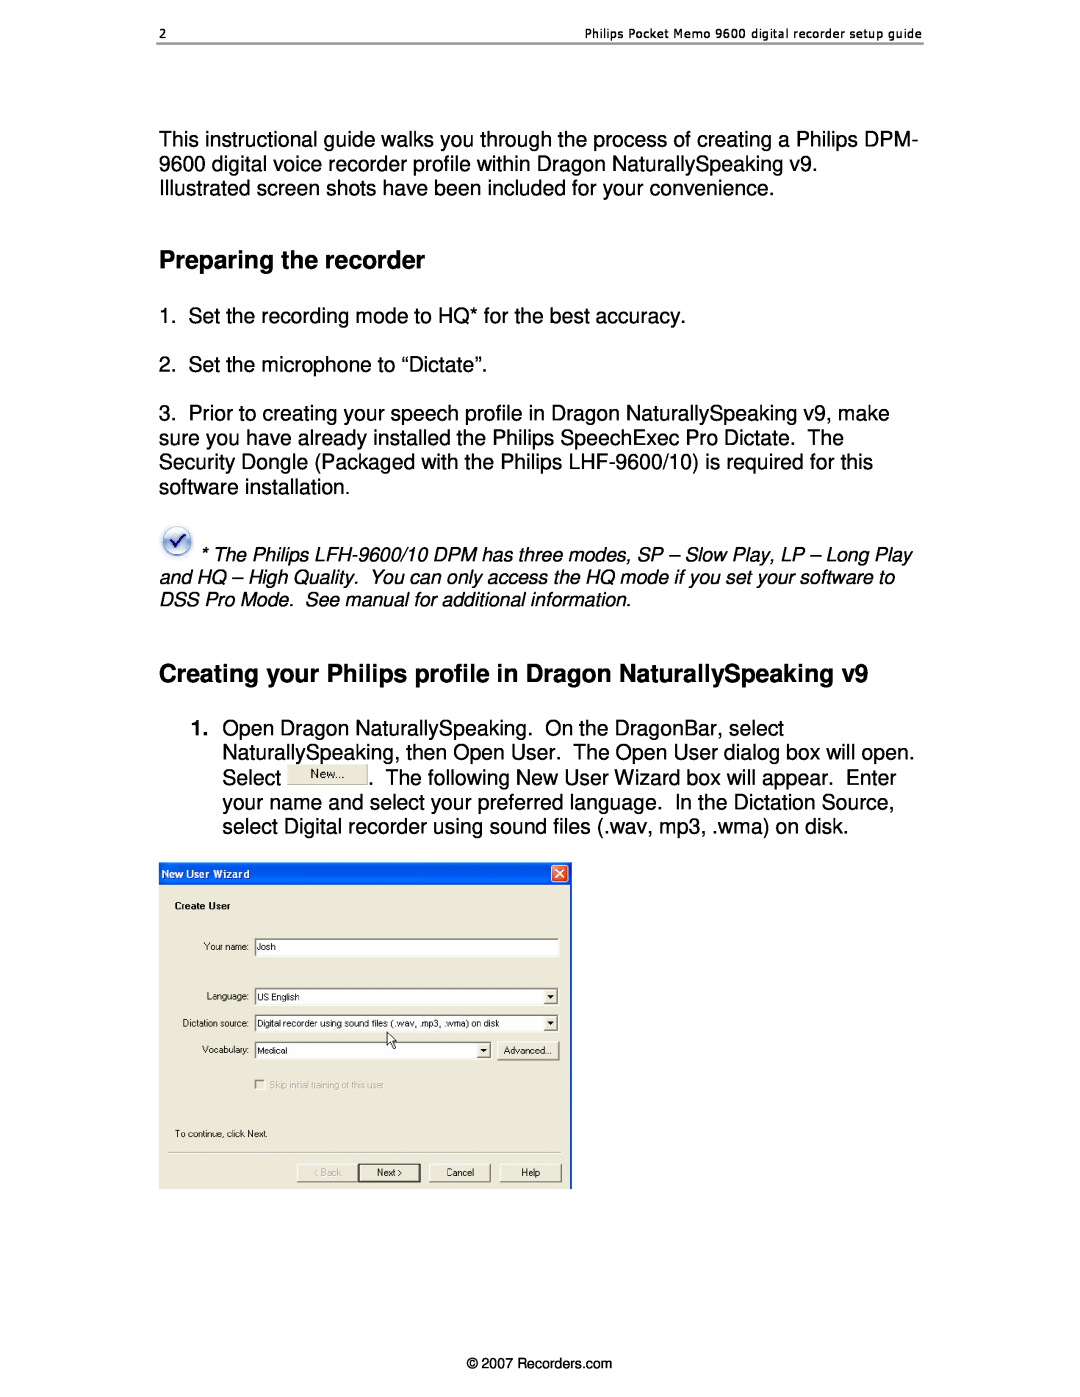 PYLE Audio LFH-9600 manual Preparing the recorder, Creating your Philips profile in Dragon NaturallySpeaking 